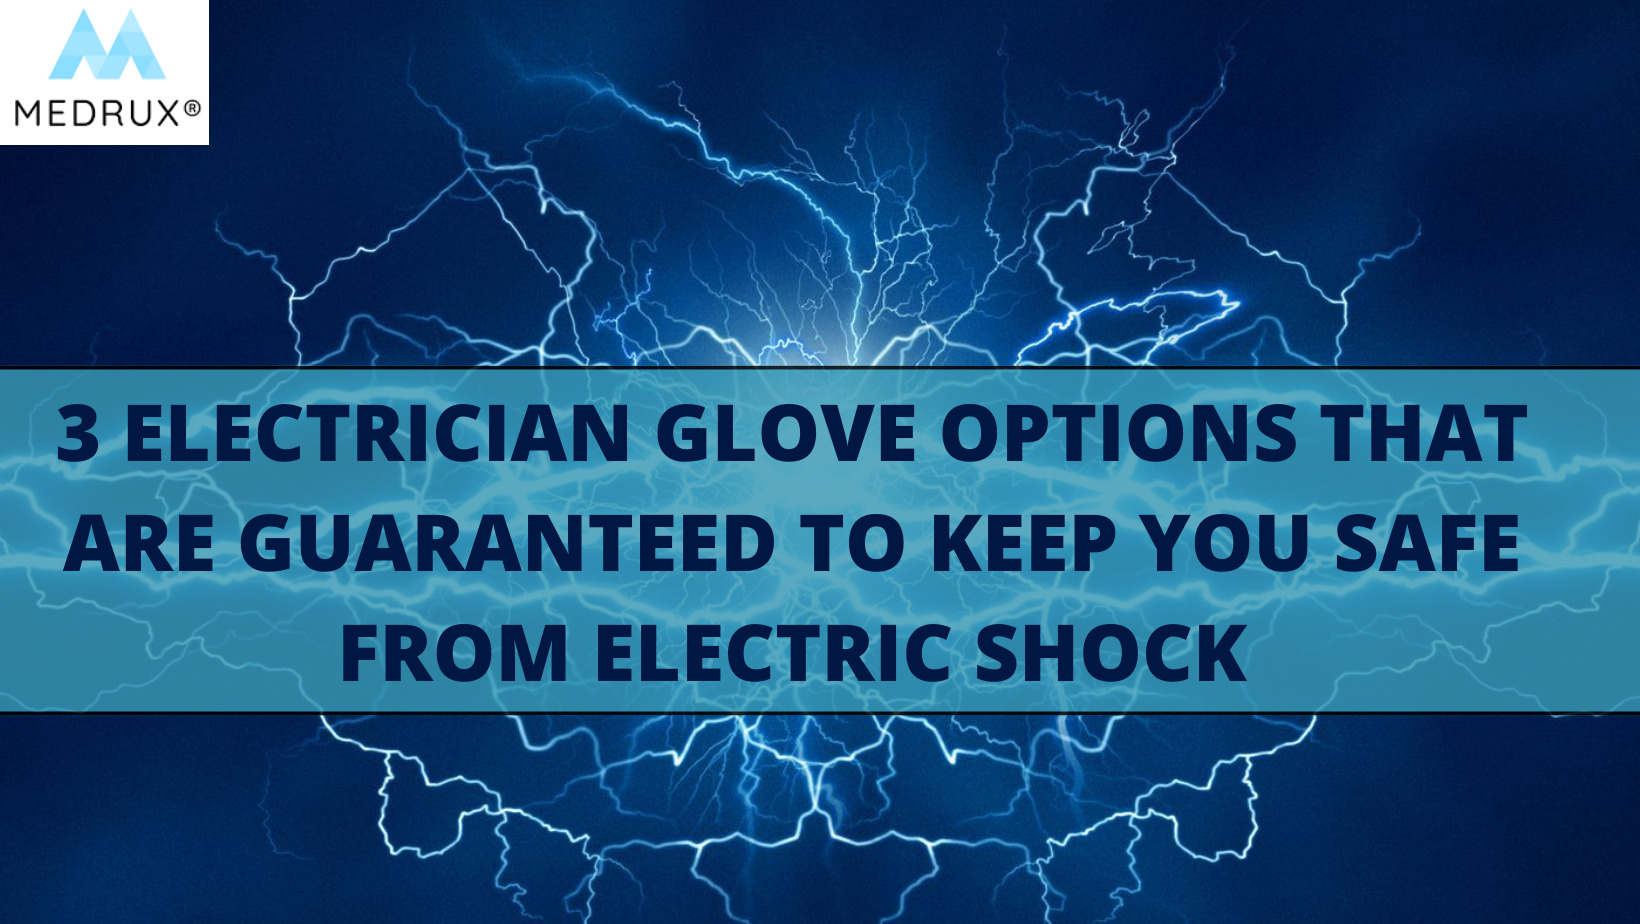 https://medrux.com/wp-content/uploads/2022/08/Electrician-Glove.jpg